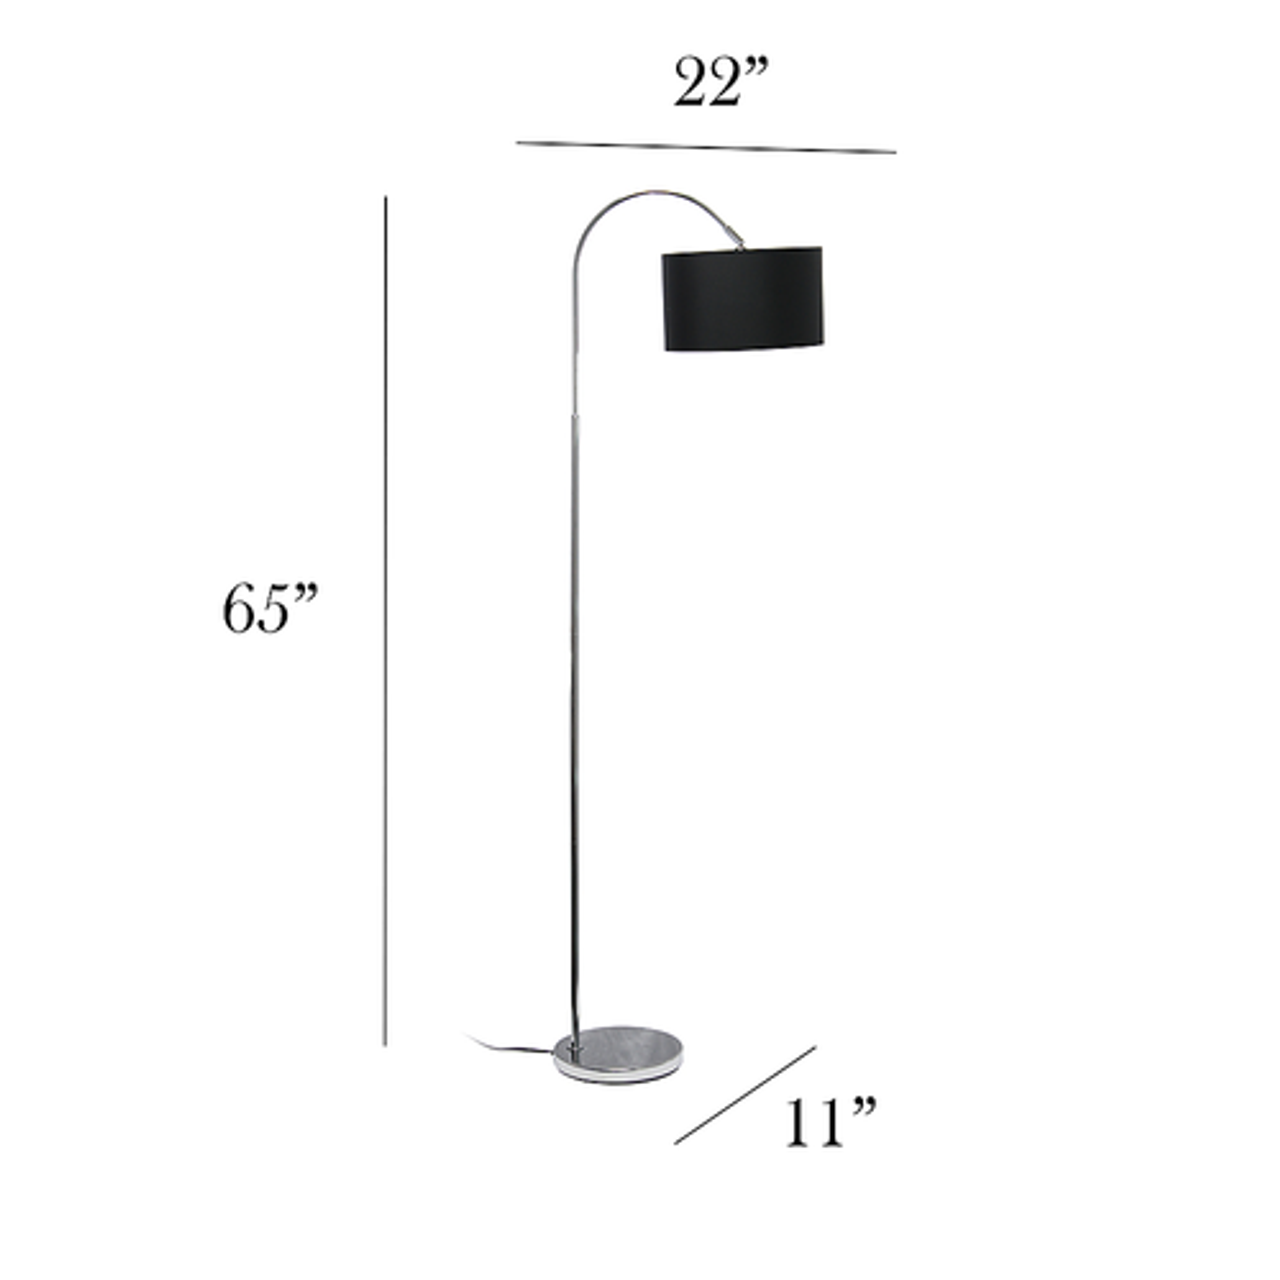 Simple Designs Arched Brushed Nickel Floor Lamp, Black Shade - Brushed Nickel base/Black shade